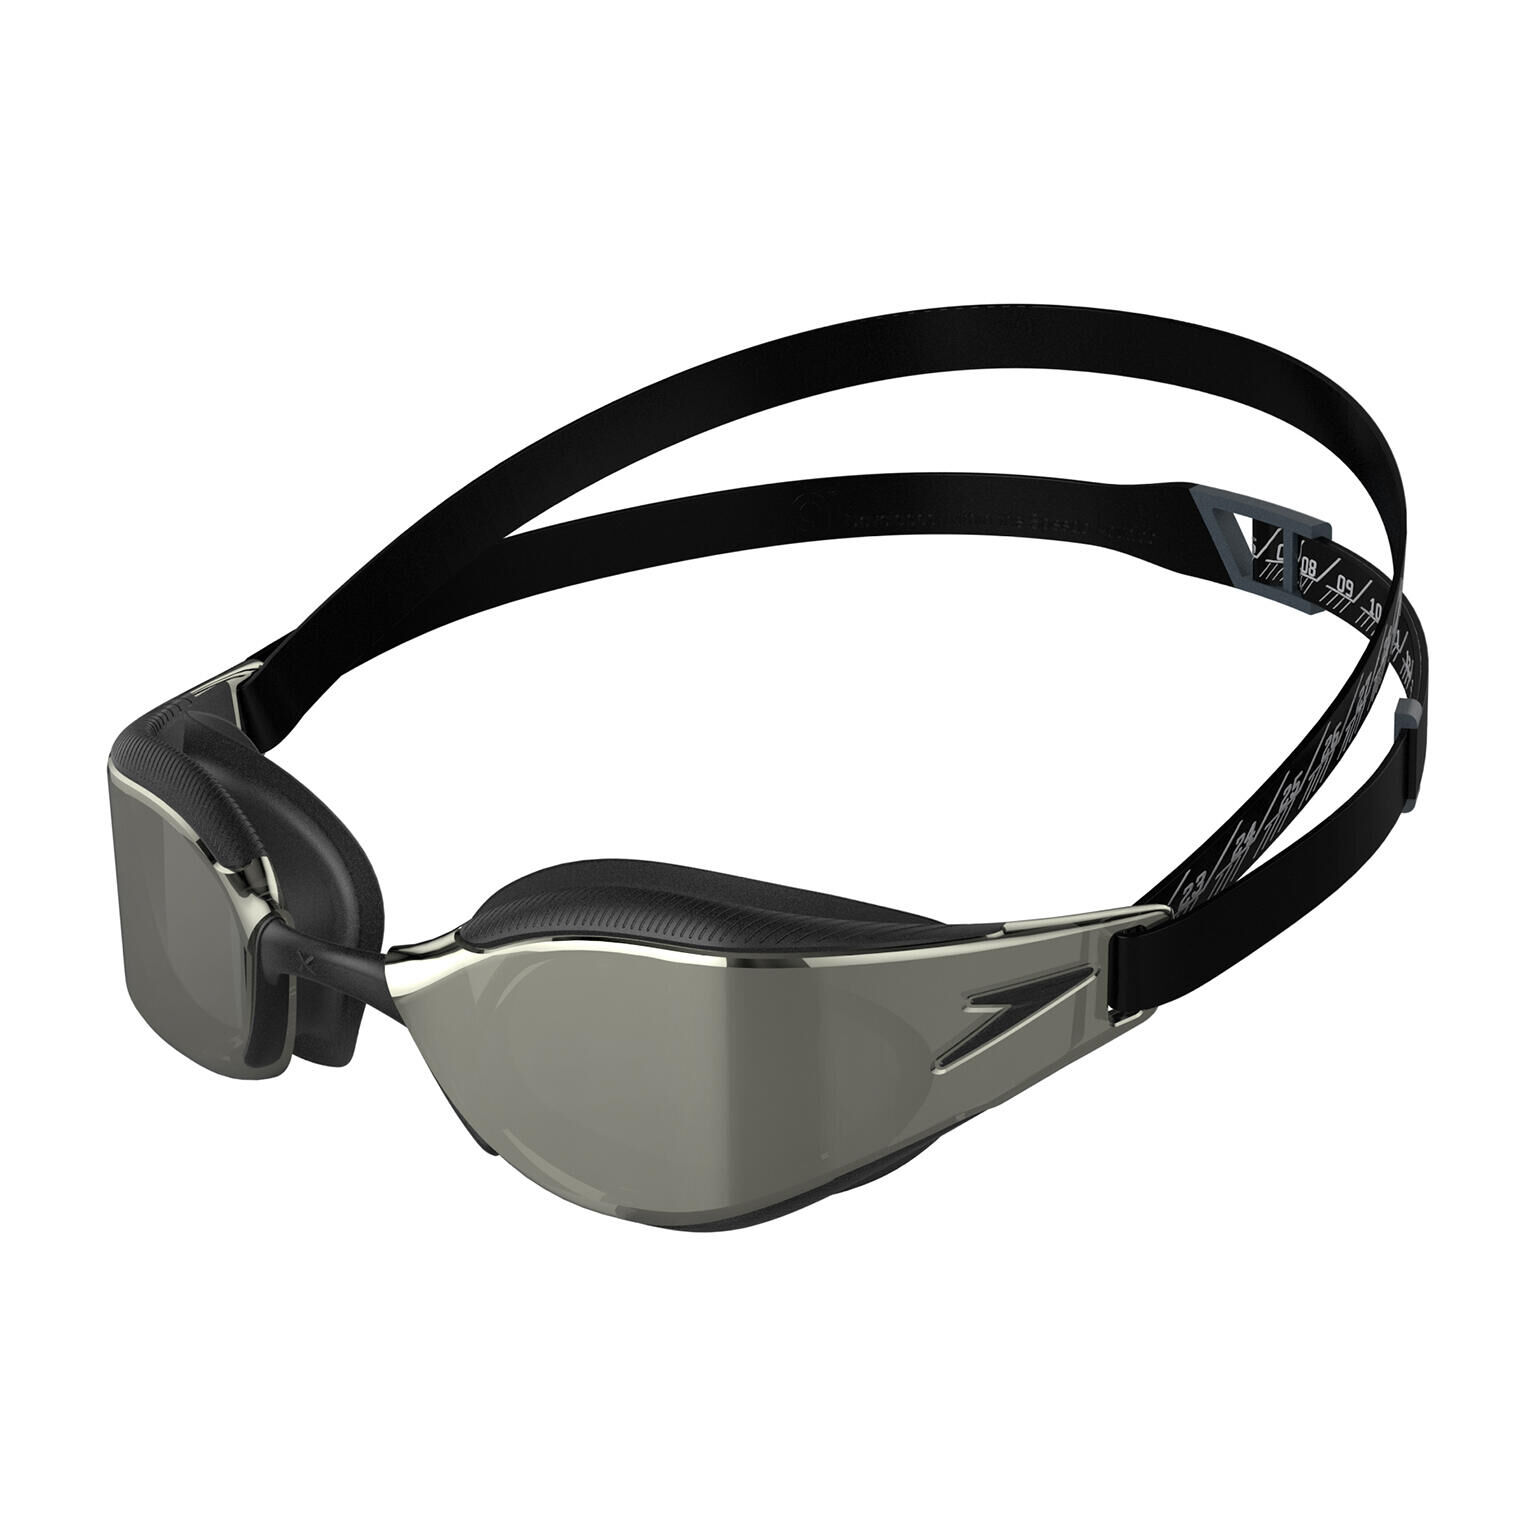 SPEEDO Speedo Fastskin Hyper Elite Mirror Goggles, Black/Grey/Chrome